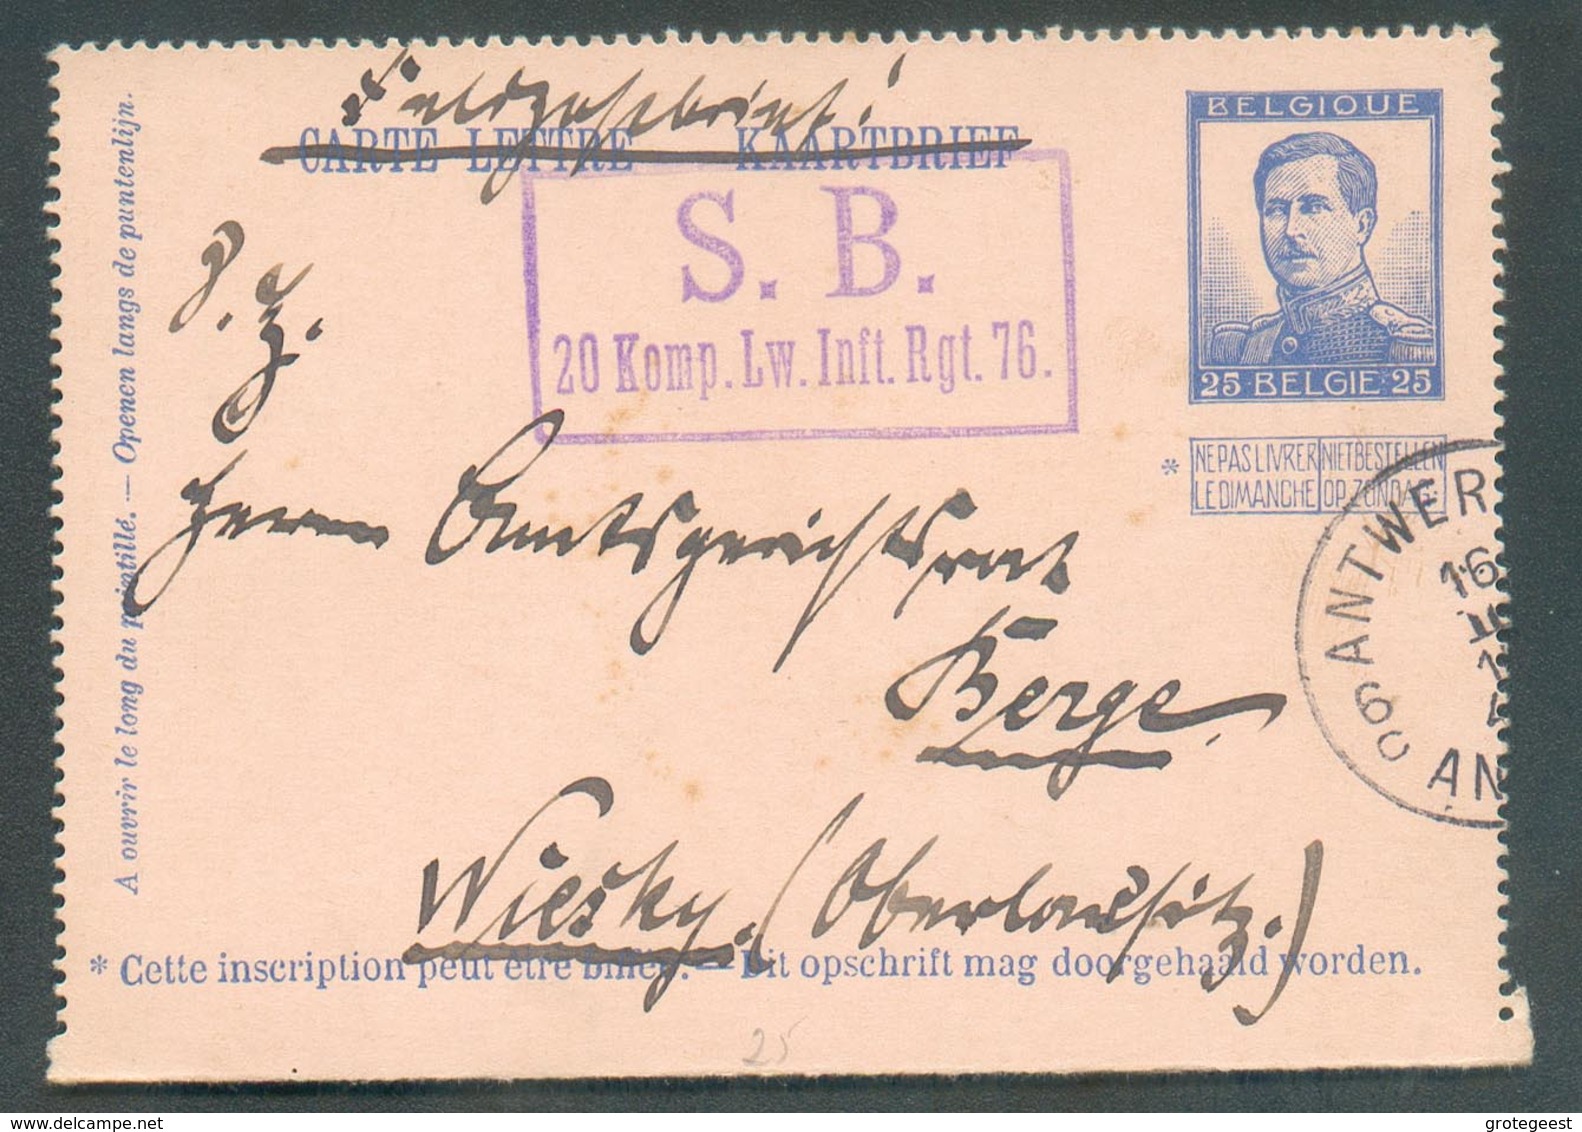 E.P. Carte-lettre 25c. Pellens Obl. Sc ANTWERPEN 6 Du 16-II-1915 En Feldpostbrief + Griffe Violette S.B. 20.Komp.Lw.Infl - Postbladen